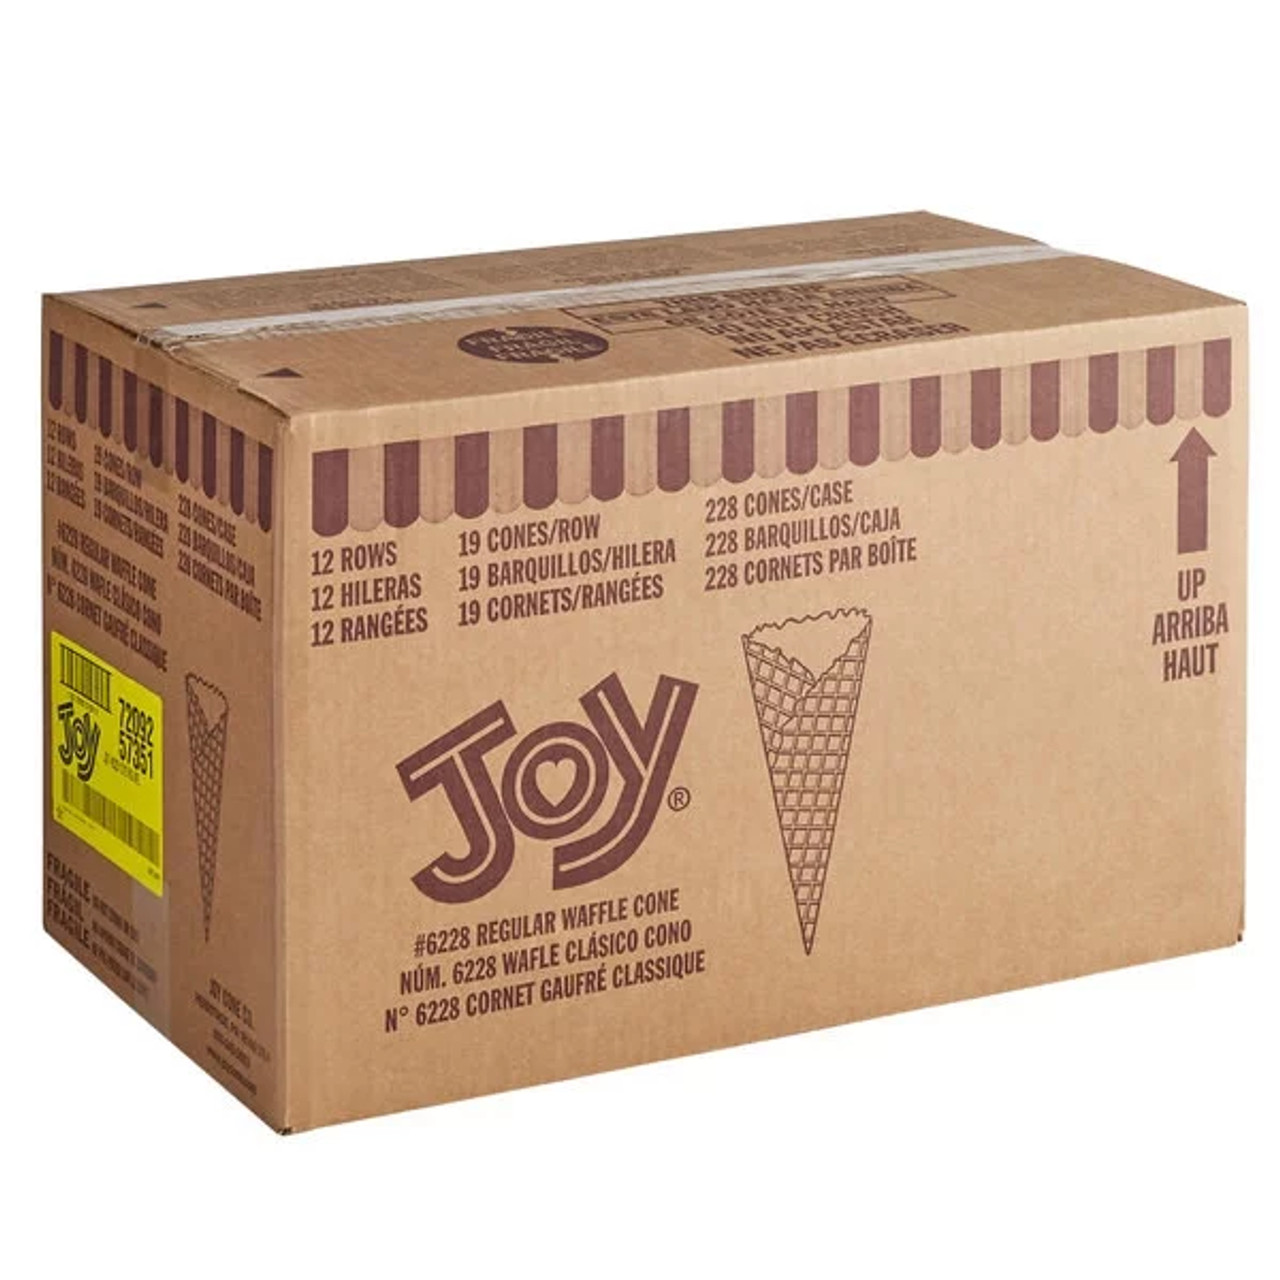 JOY Regular Waffle Cone - 16 Case/Pallet for Irresistible Ice Cream Delights